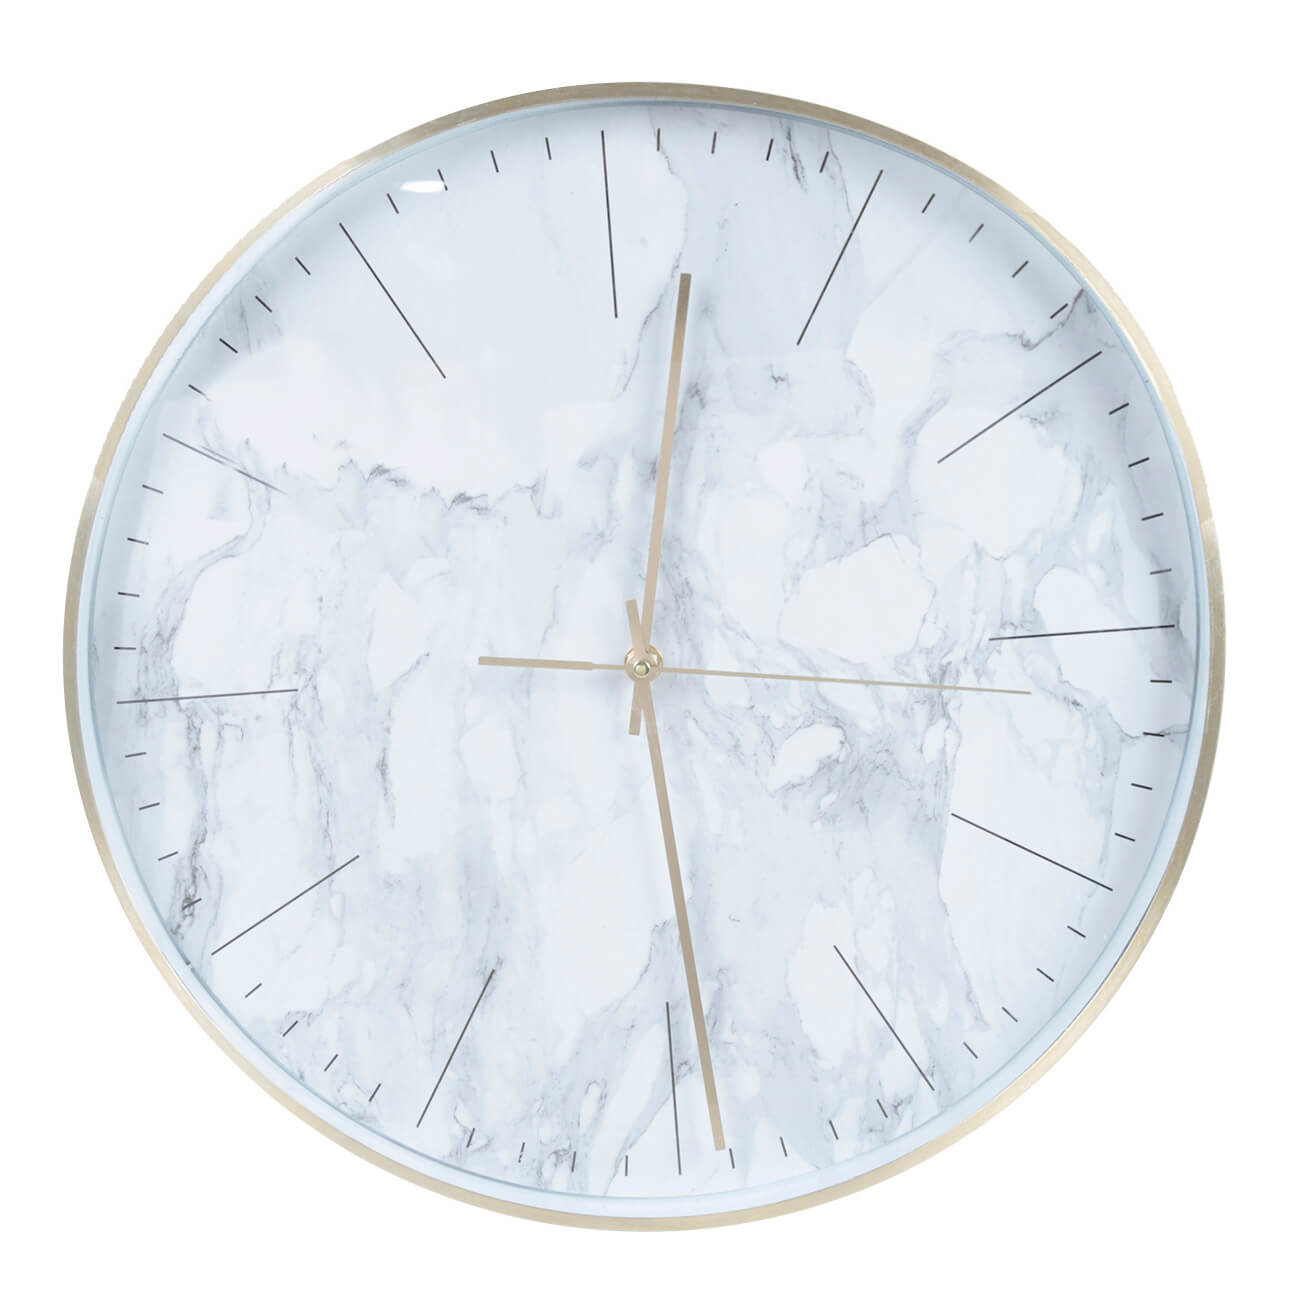 Часы настенные, 40 см, пластик/стекло, круглые, белые, Мрамор, Maniera